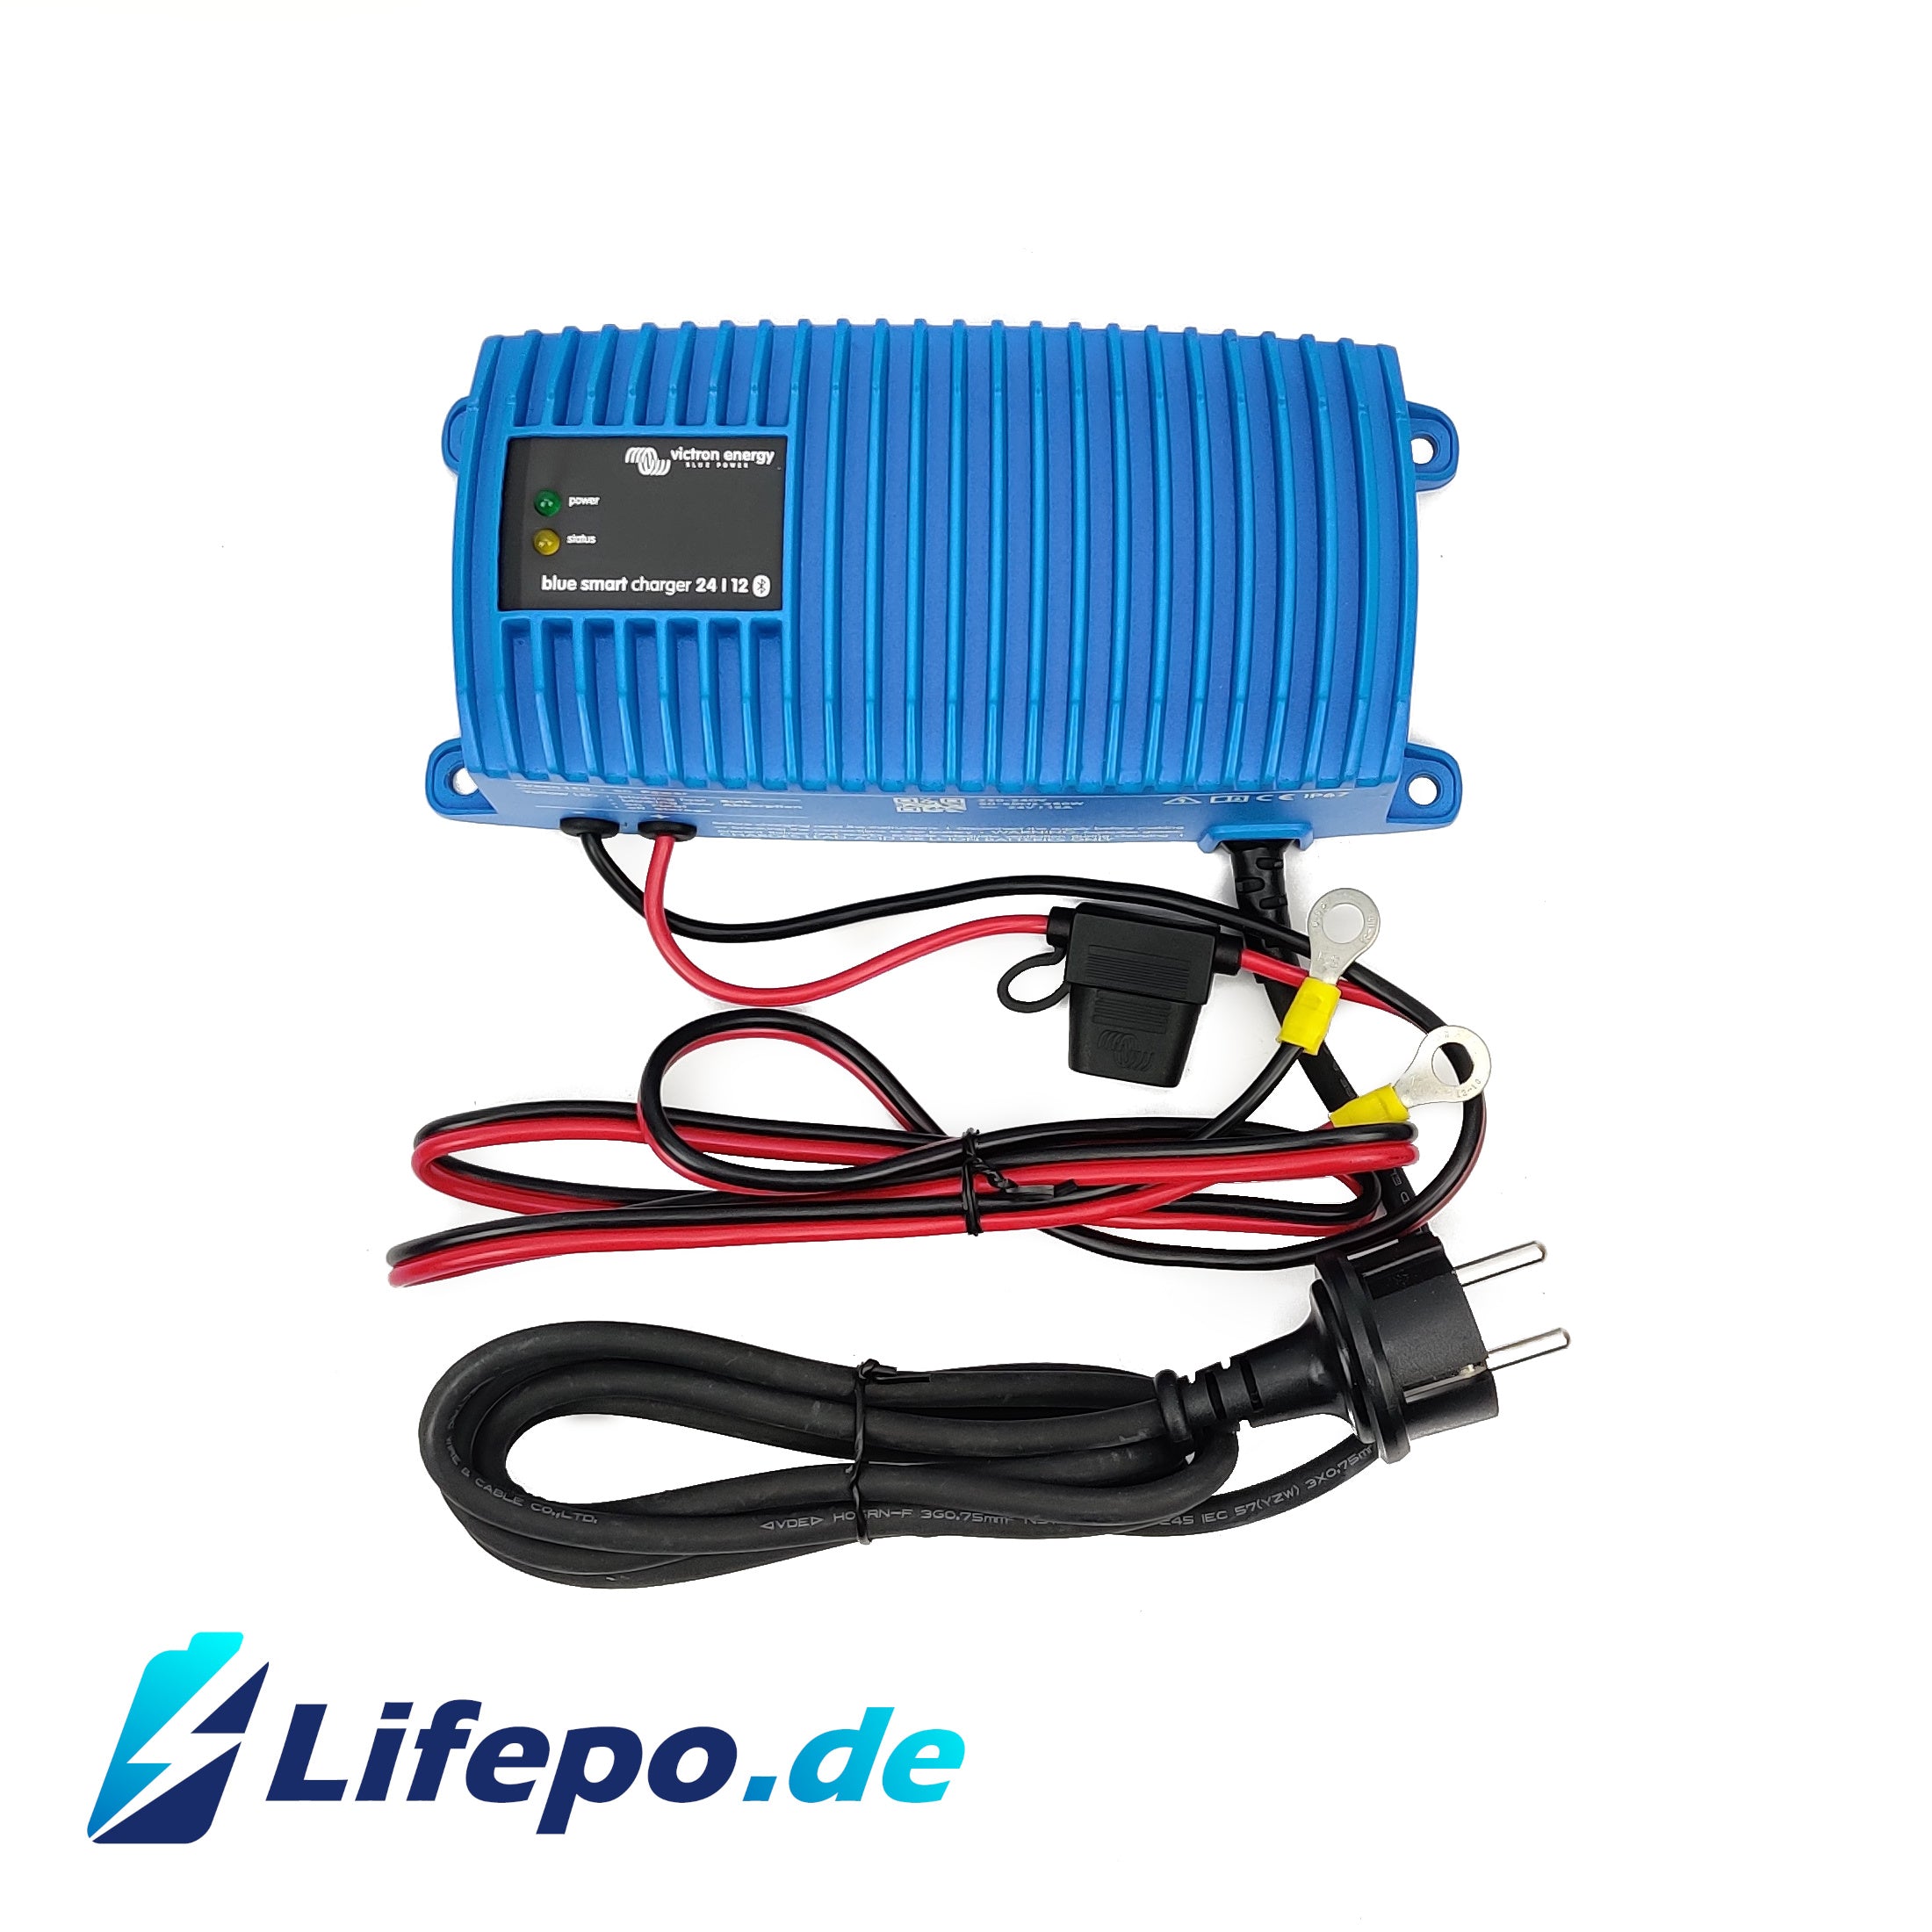 Victron Energy Blue Smart IP67 charger 24/12 230V –